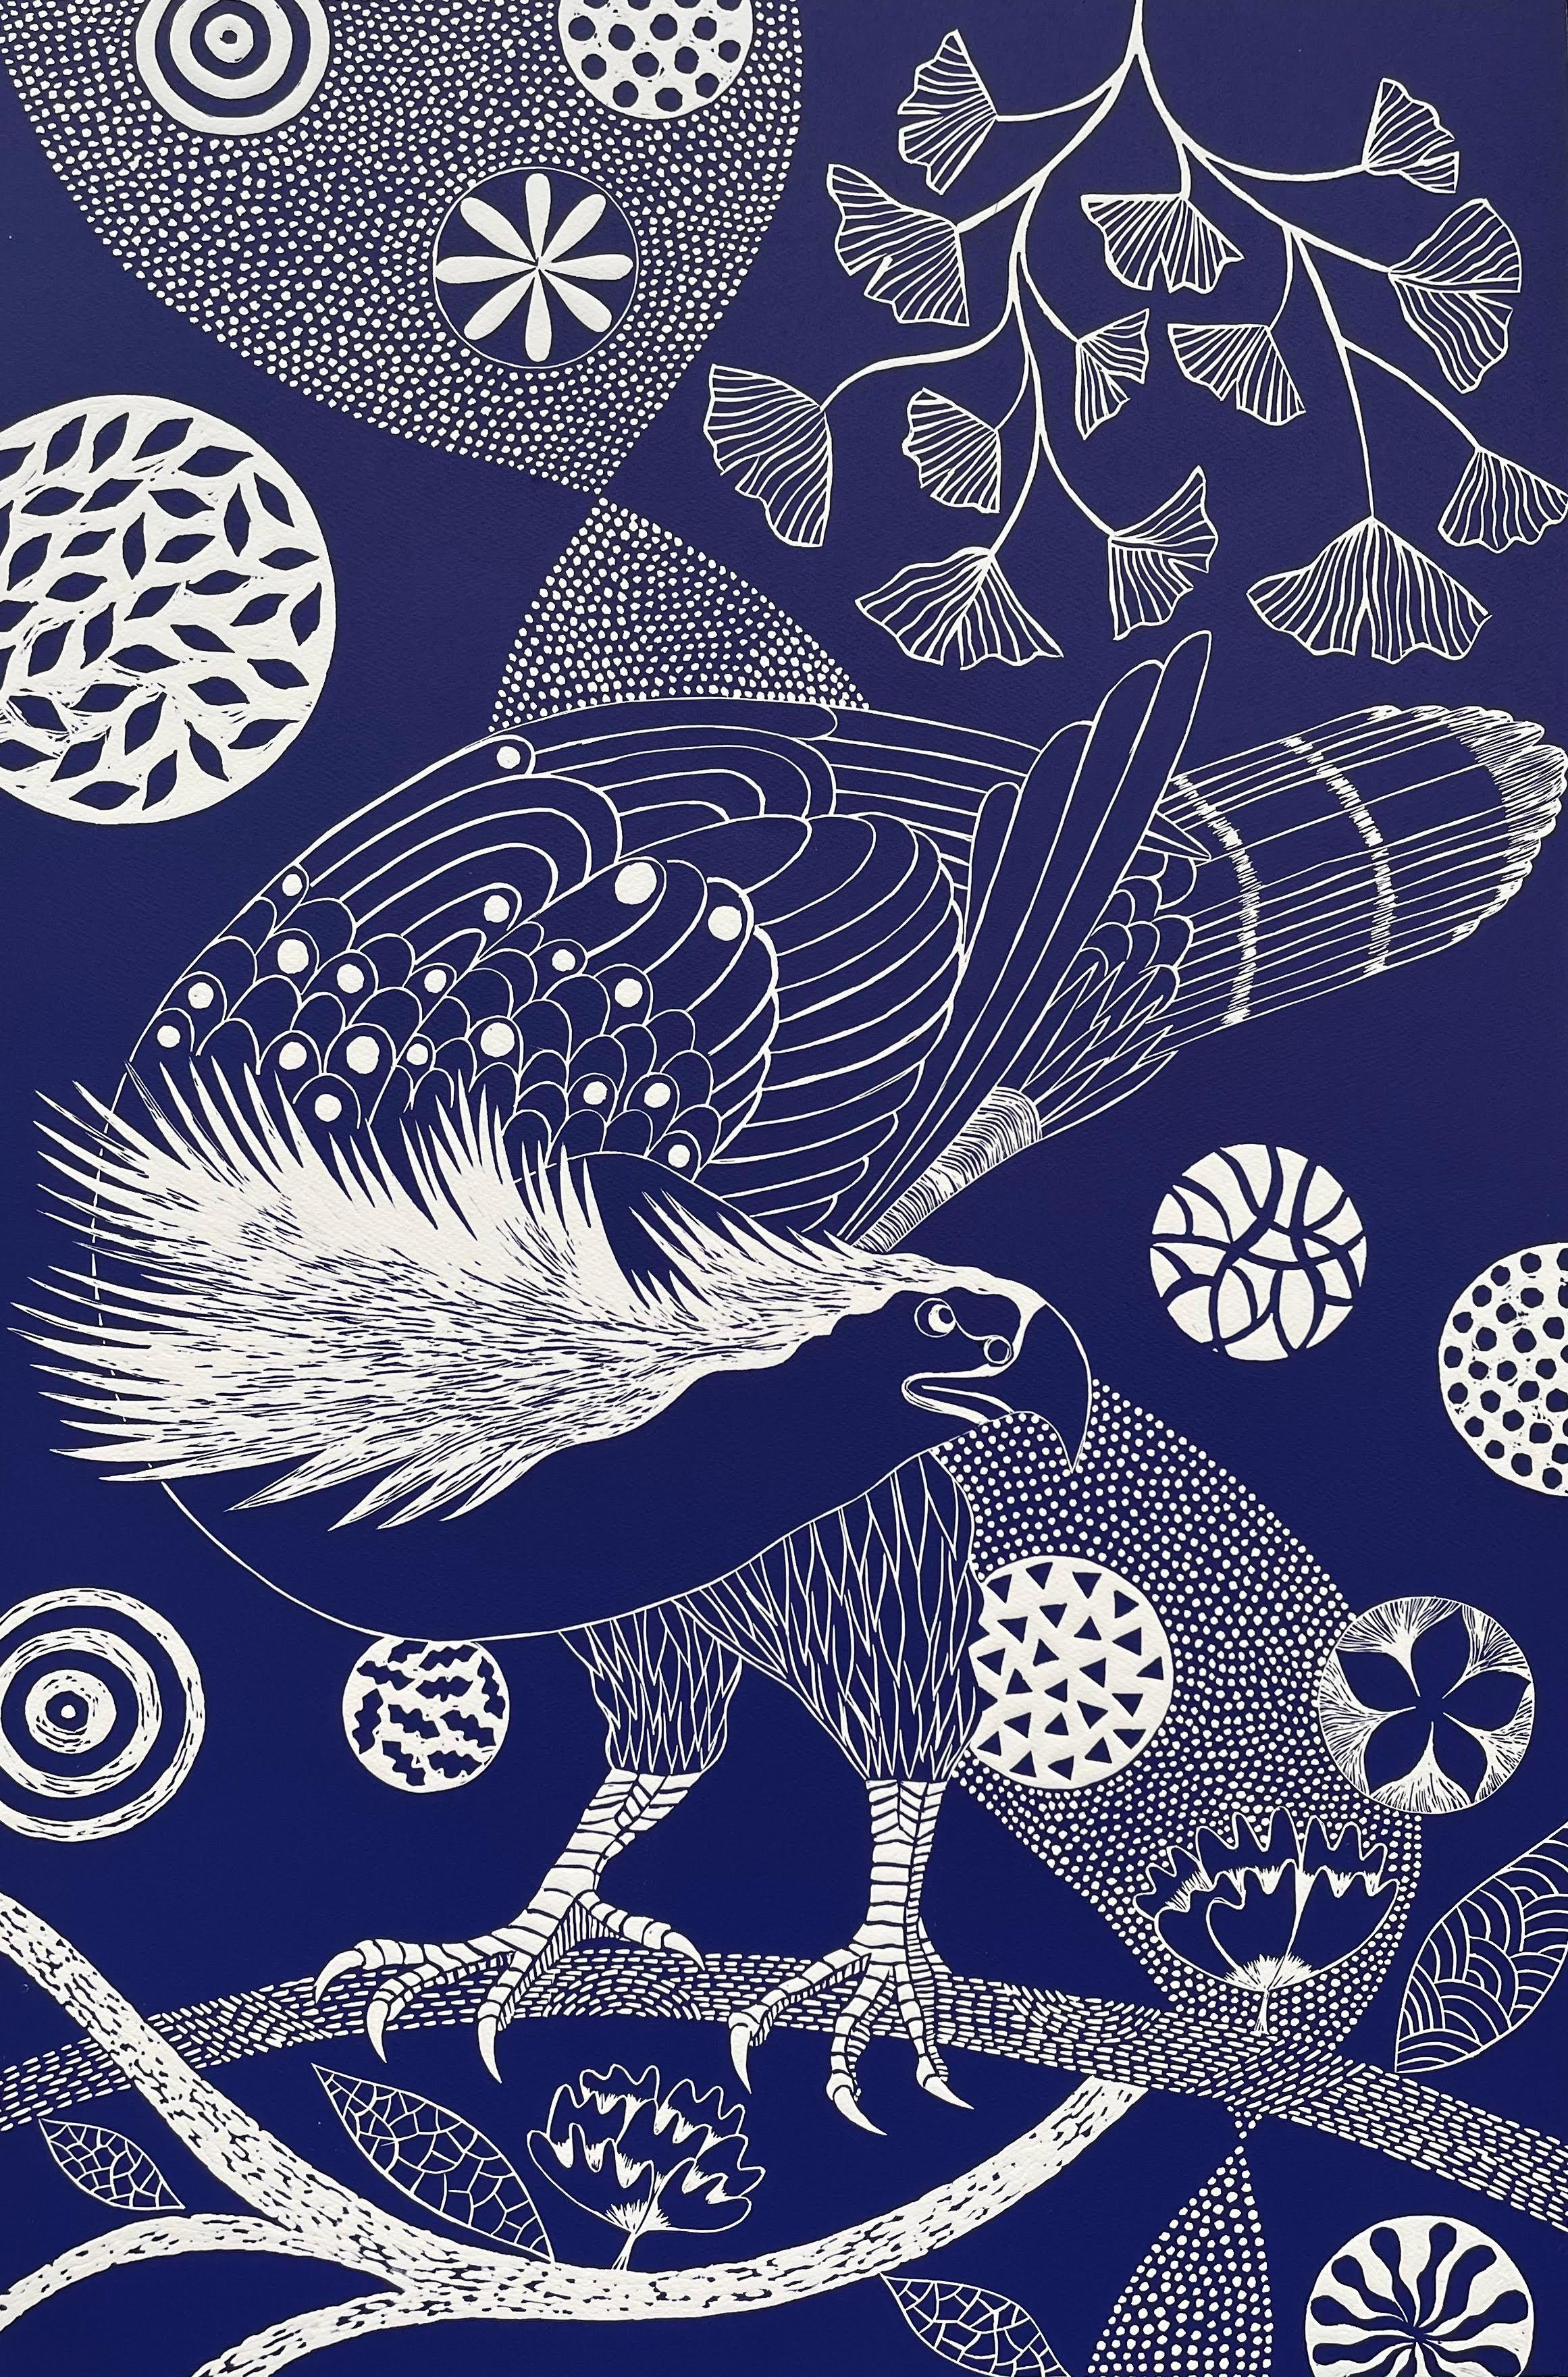 „Reigning and Roosting“   Volkskunst inspirierter Linoleum-Block-Vogeldruck, tiefblau, Volkskunst – Print von Lisa Houck